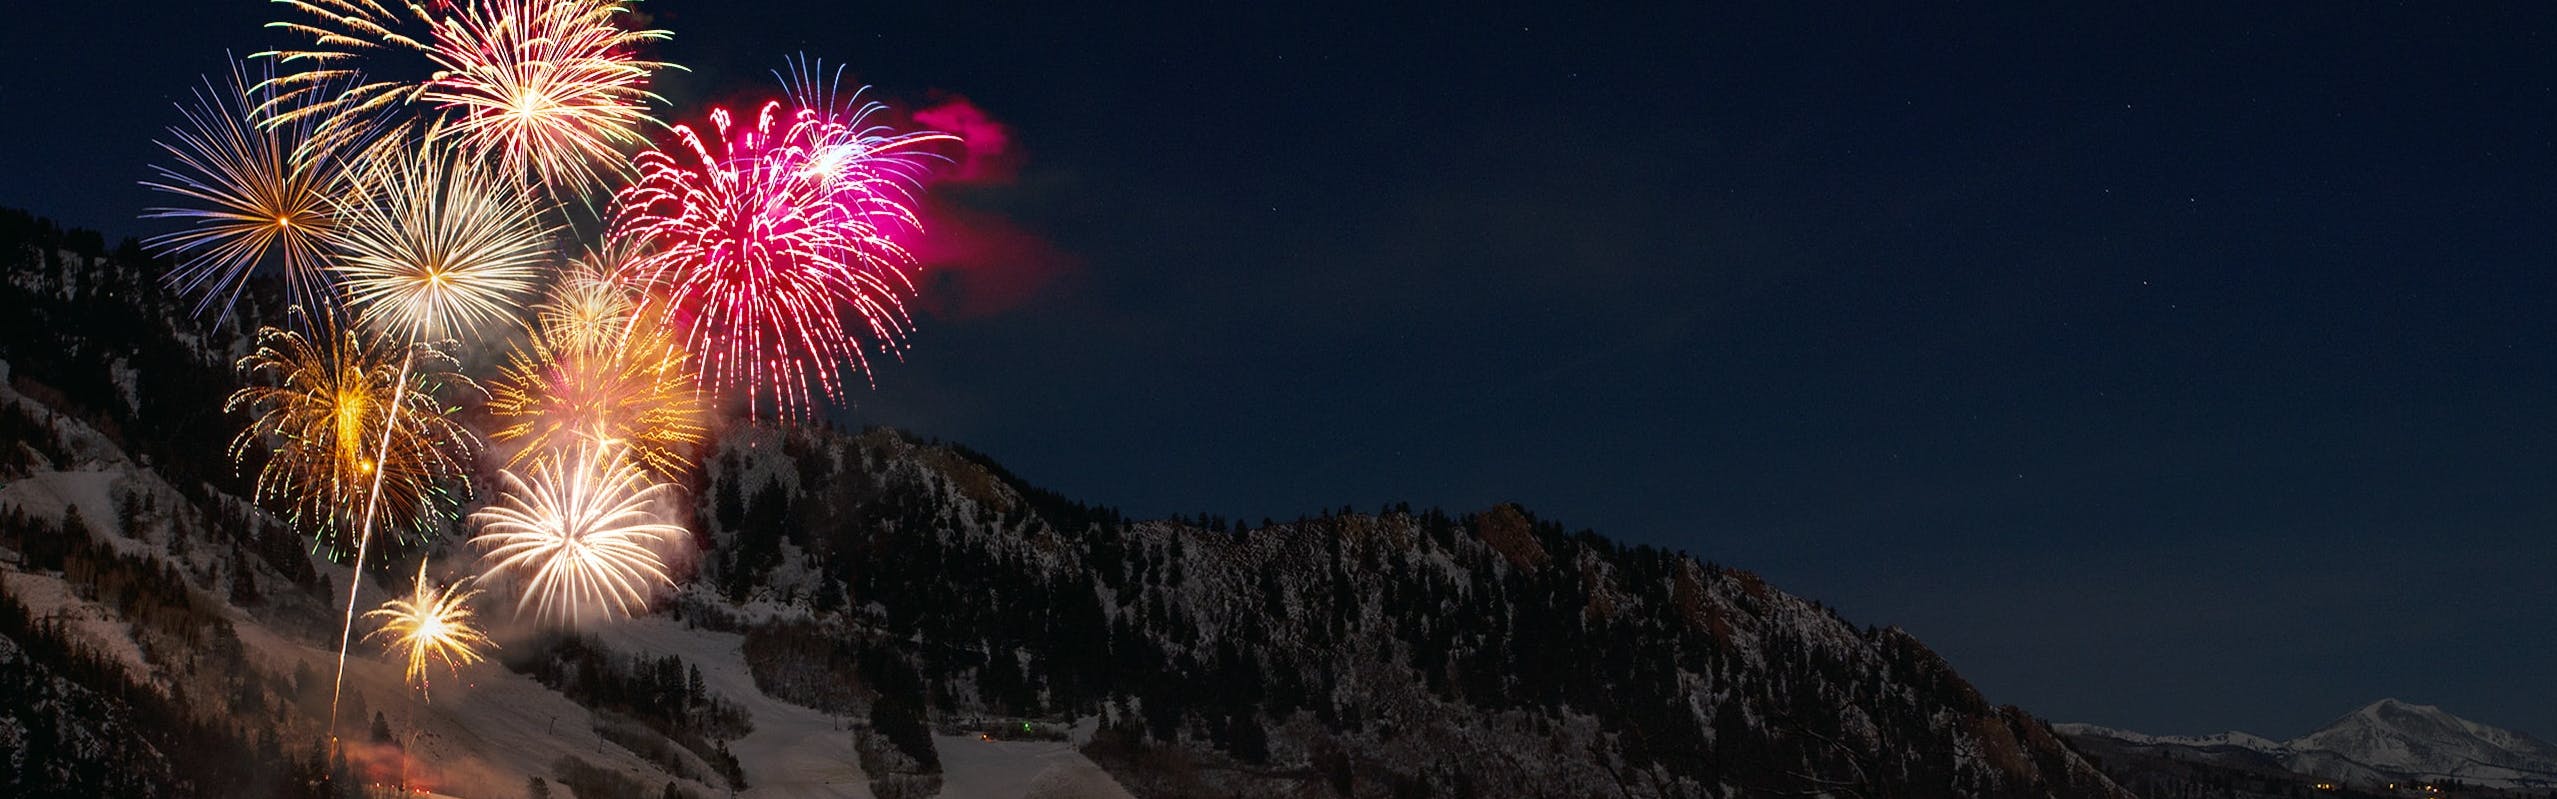 Fireworks explode over a ski resort. It is dark at the ski resort.